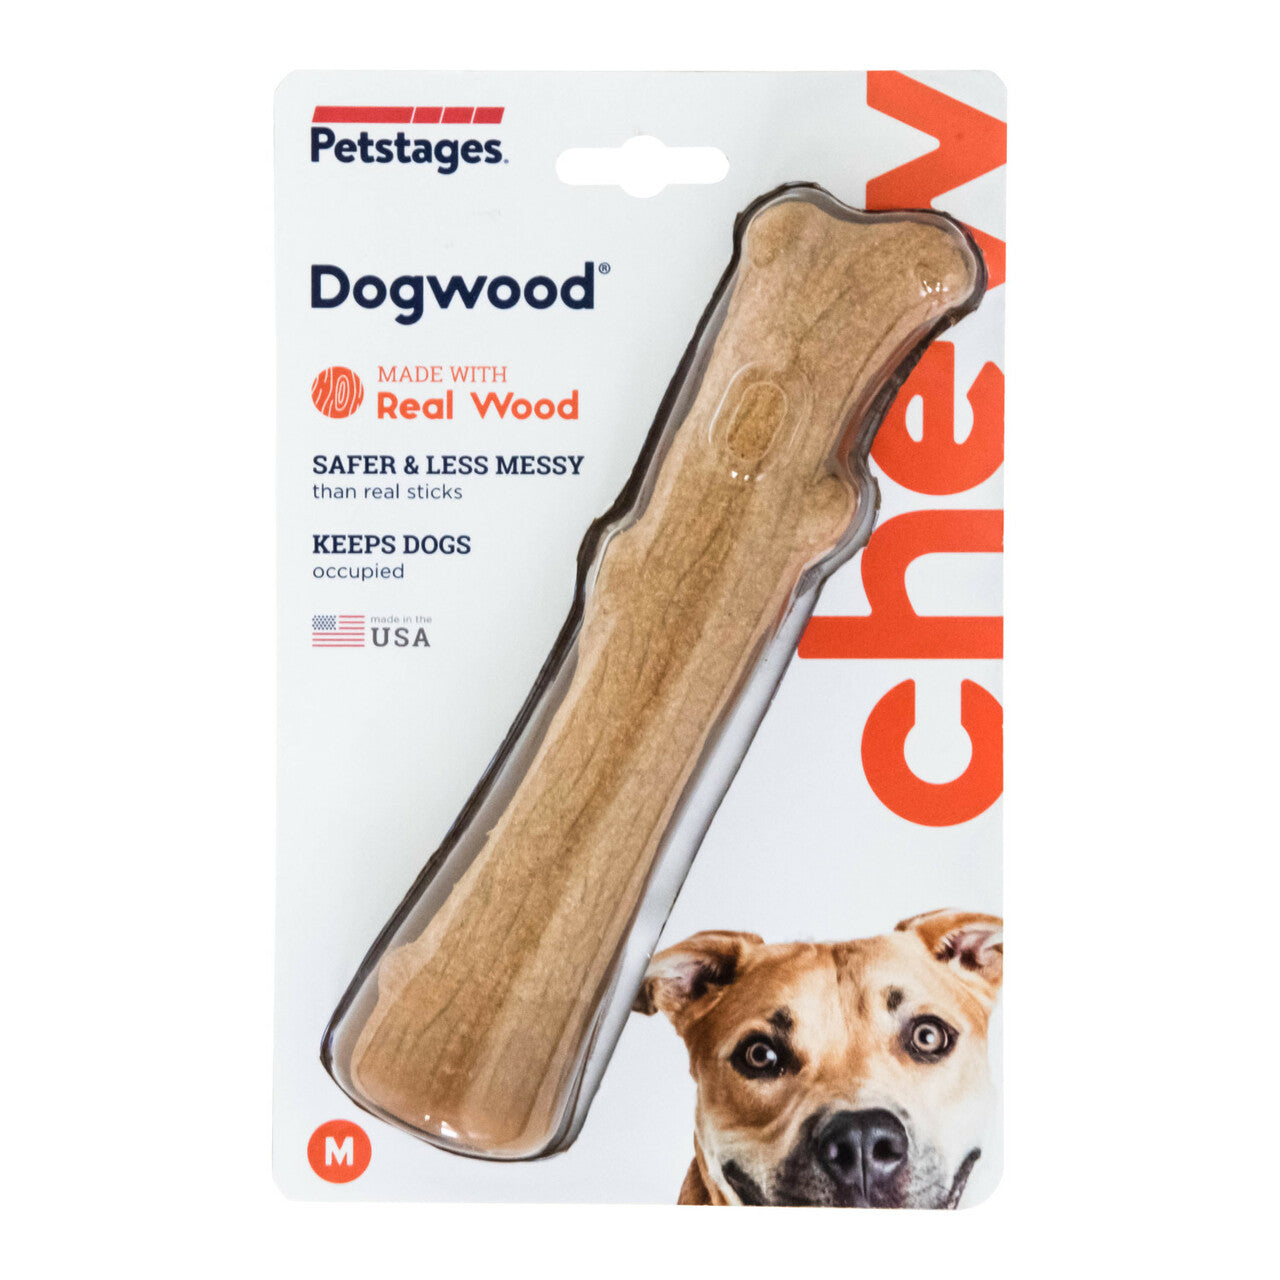 Dogwood Original